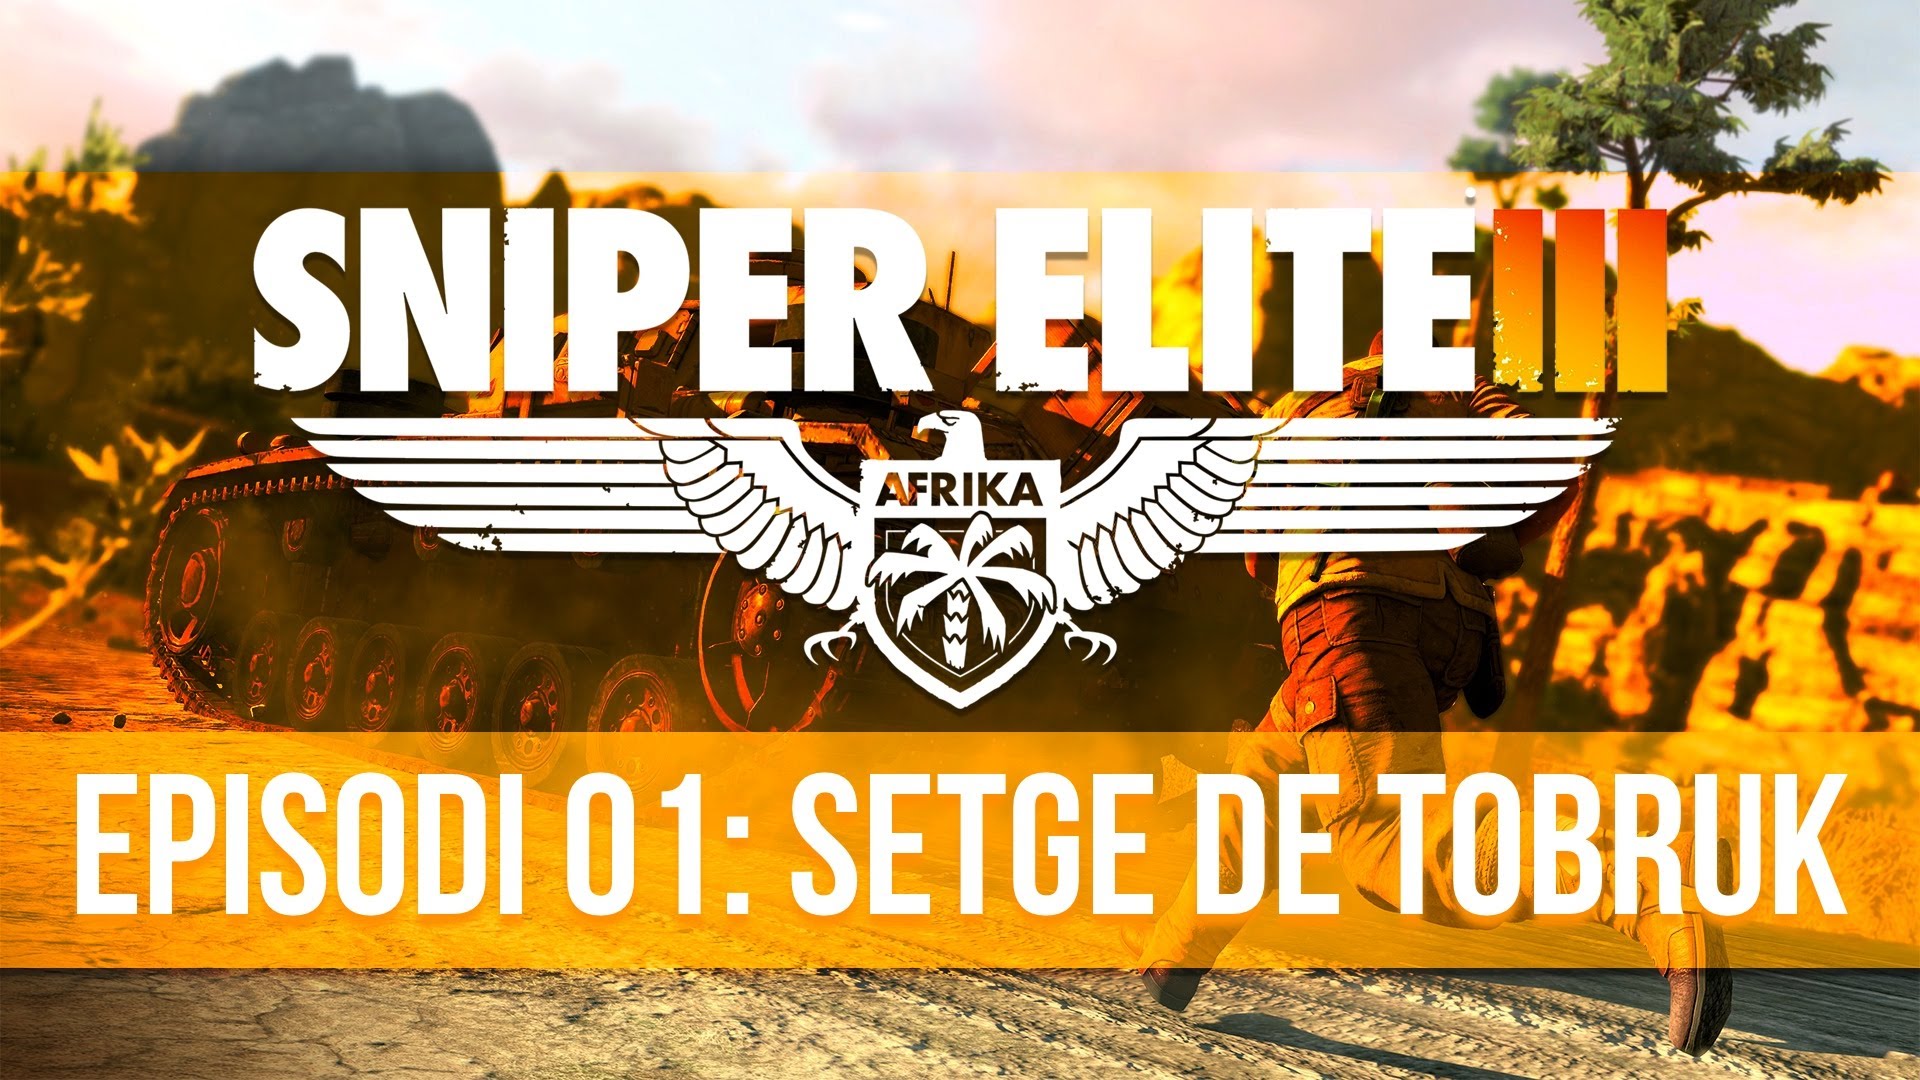 Sniper Elite III - Episodi 1: Setge de Tobruk de AdriaVlogs